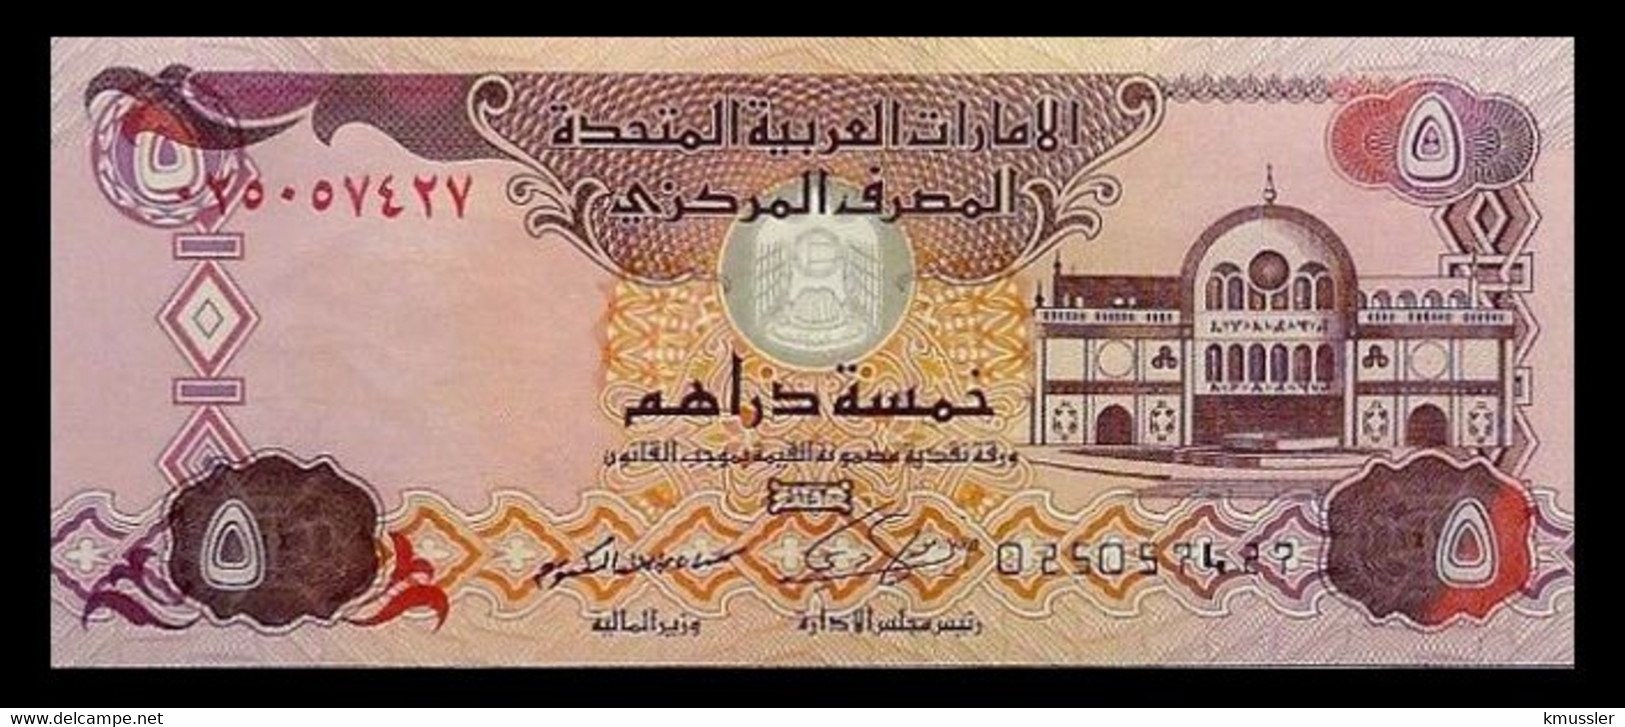 # # # Banknote Aus Den Vereinigten Emiraten (VAE) 5 Dirhams 2014 UNC # # # - Ver. Arab. Emirate